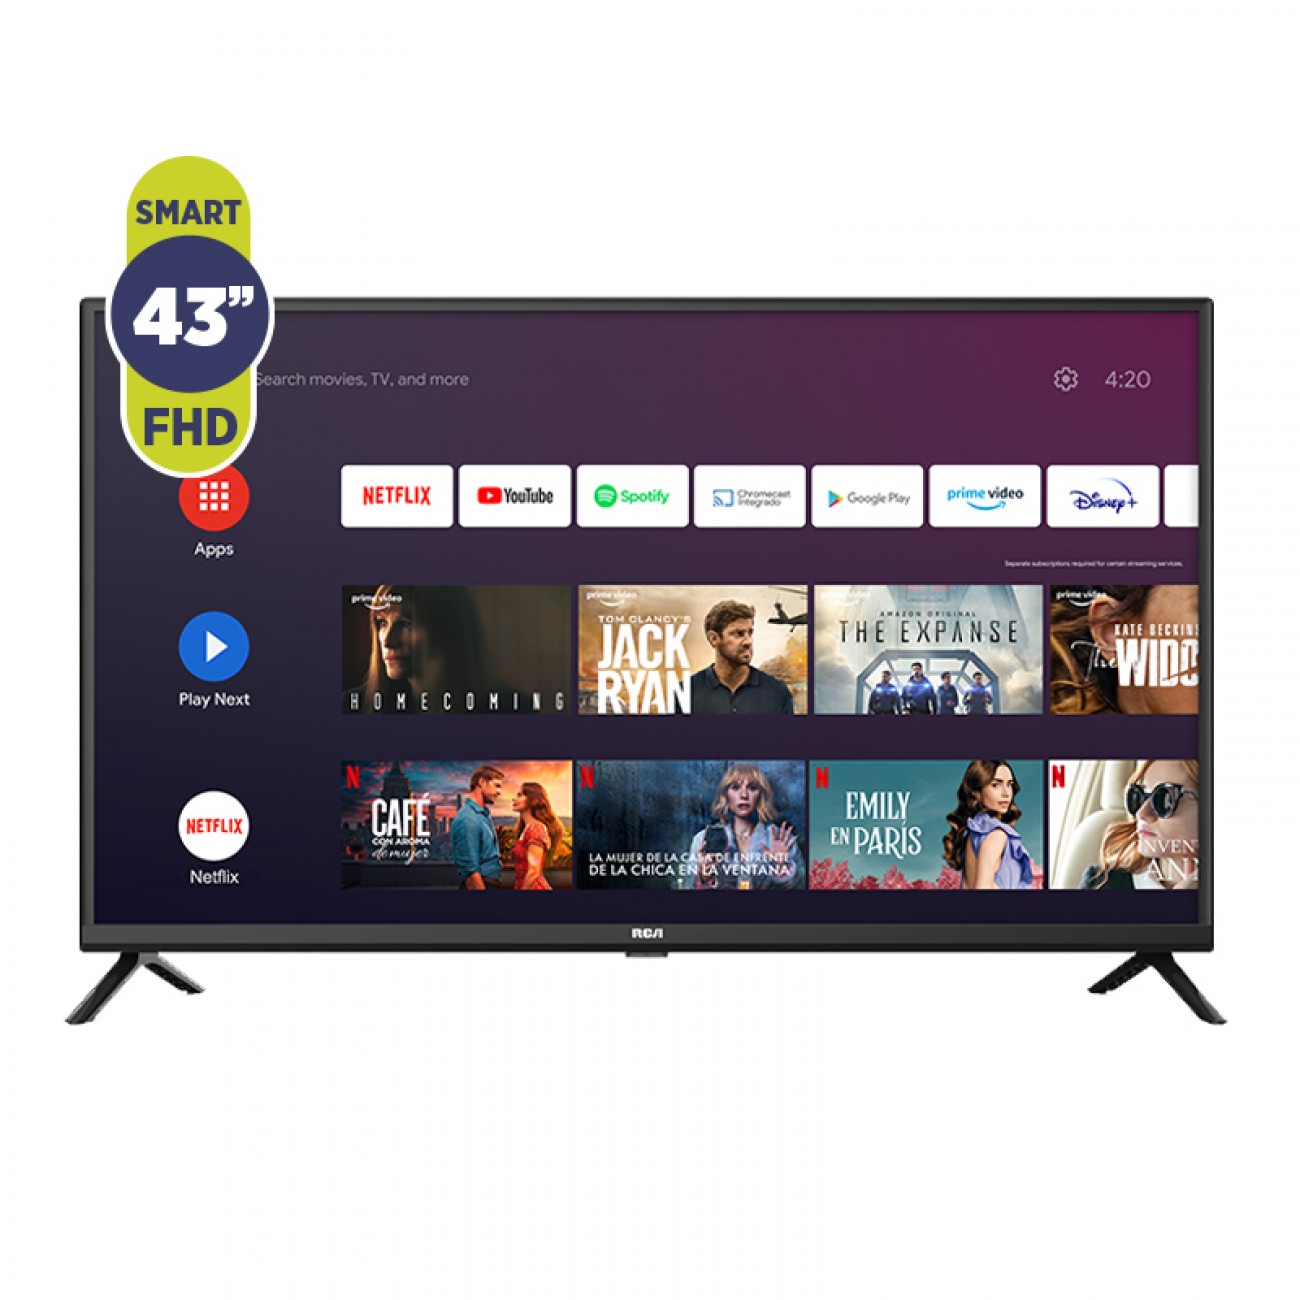 Smart Tv Led 32 Tcl L32s5400 Android Full Hd - Genesio Hogar